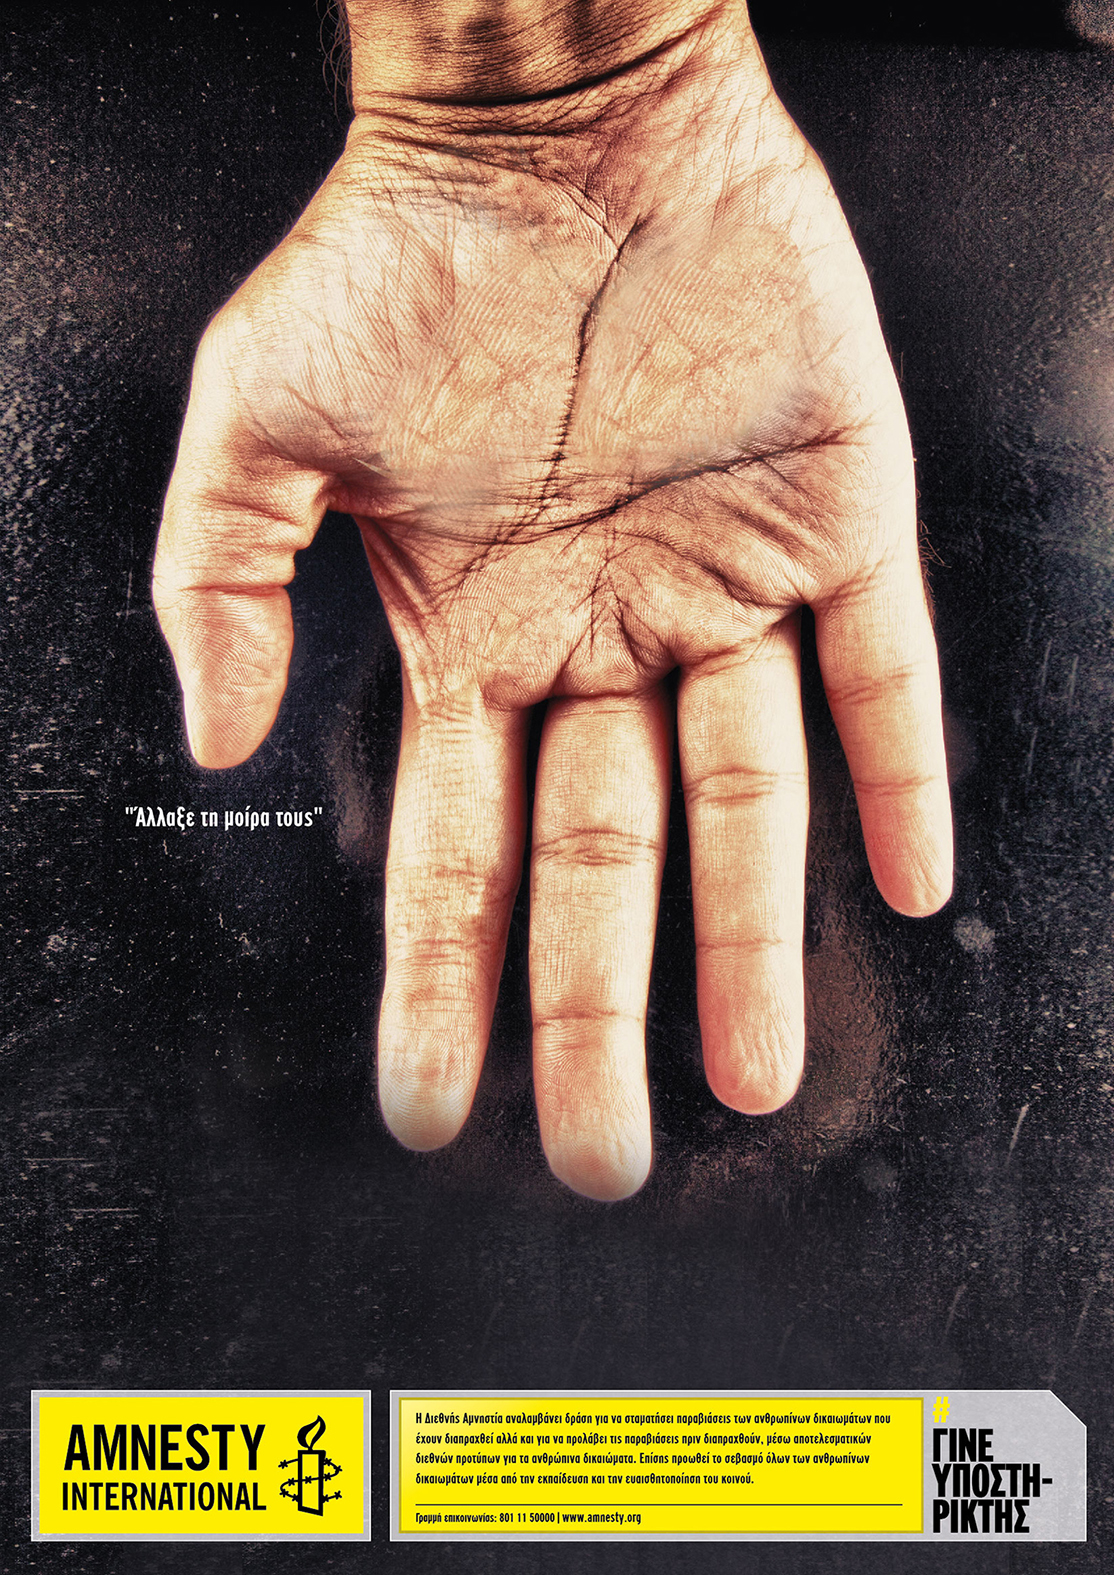 amnesty International print ad tortures victims humans